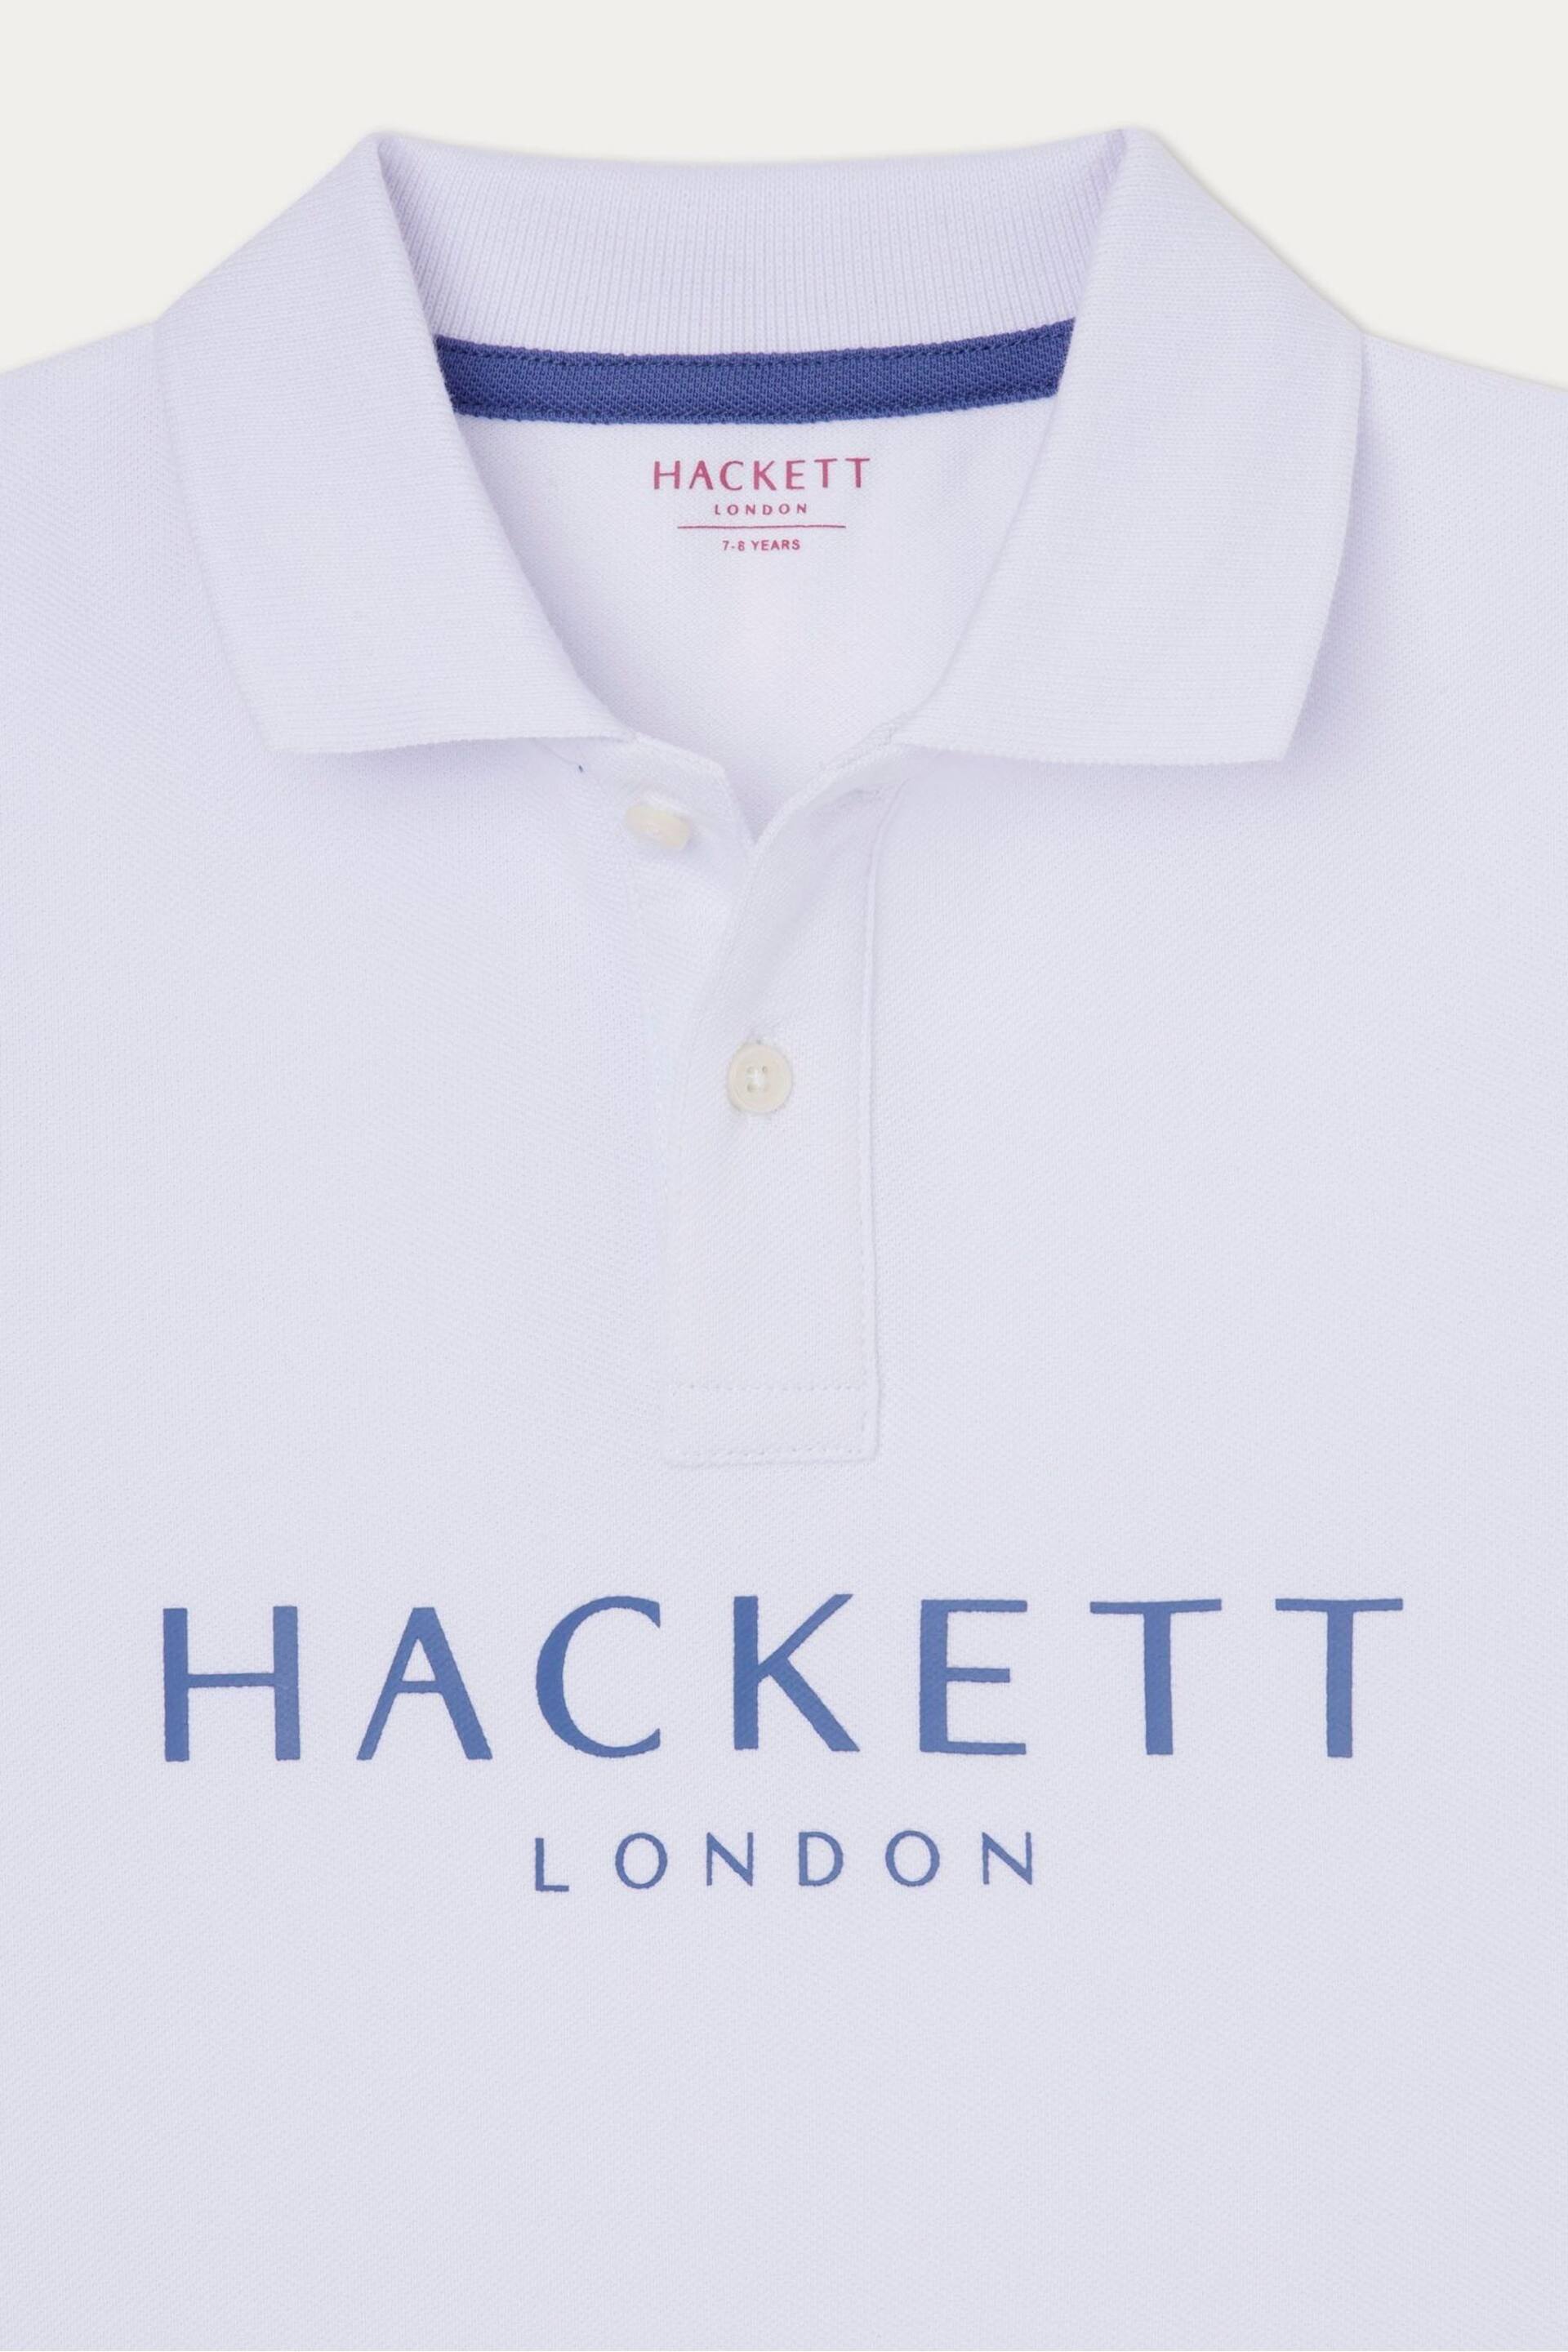 Hackett London Older Boys Short Sleeve White Polo Shirt - Image 3 of 3